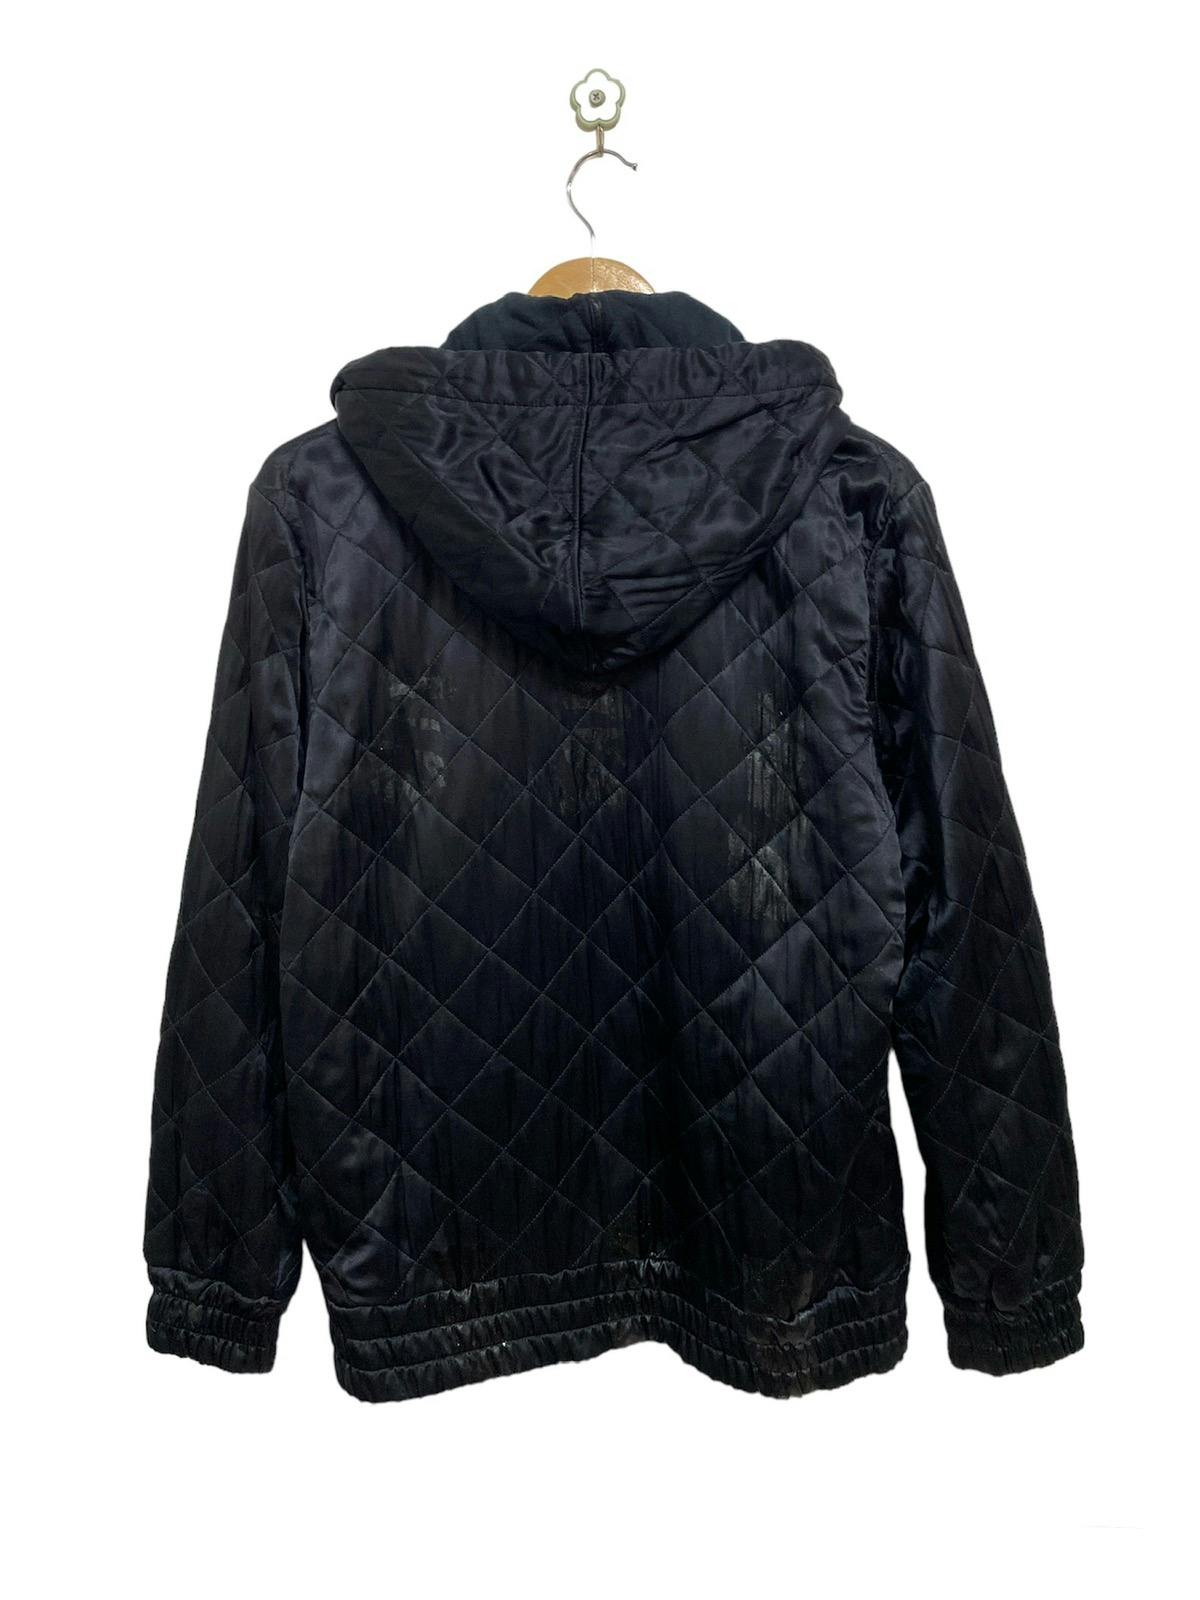 Dolce & Gabbana D&G Black Quilted Zipper Hoodie Jacket - 6